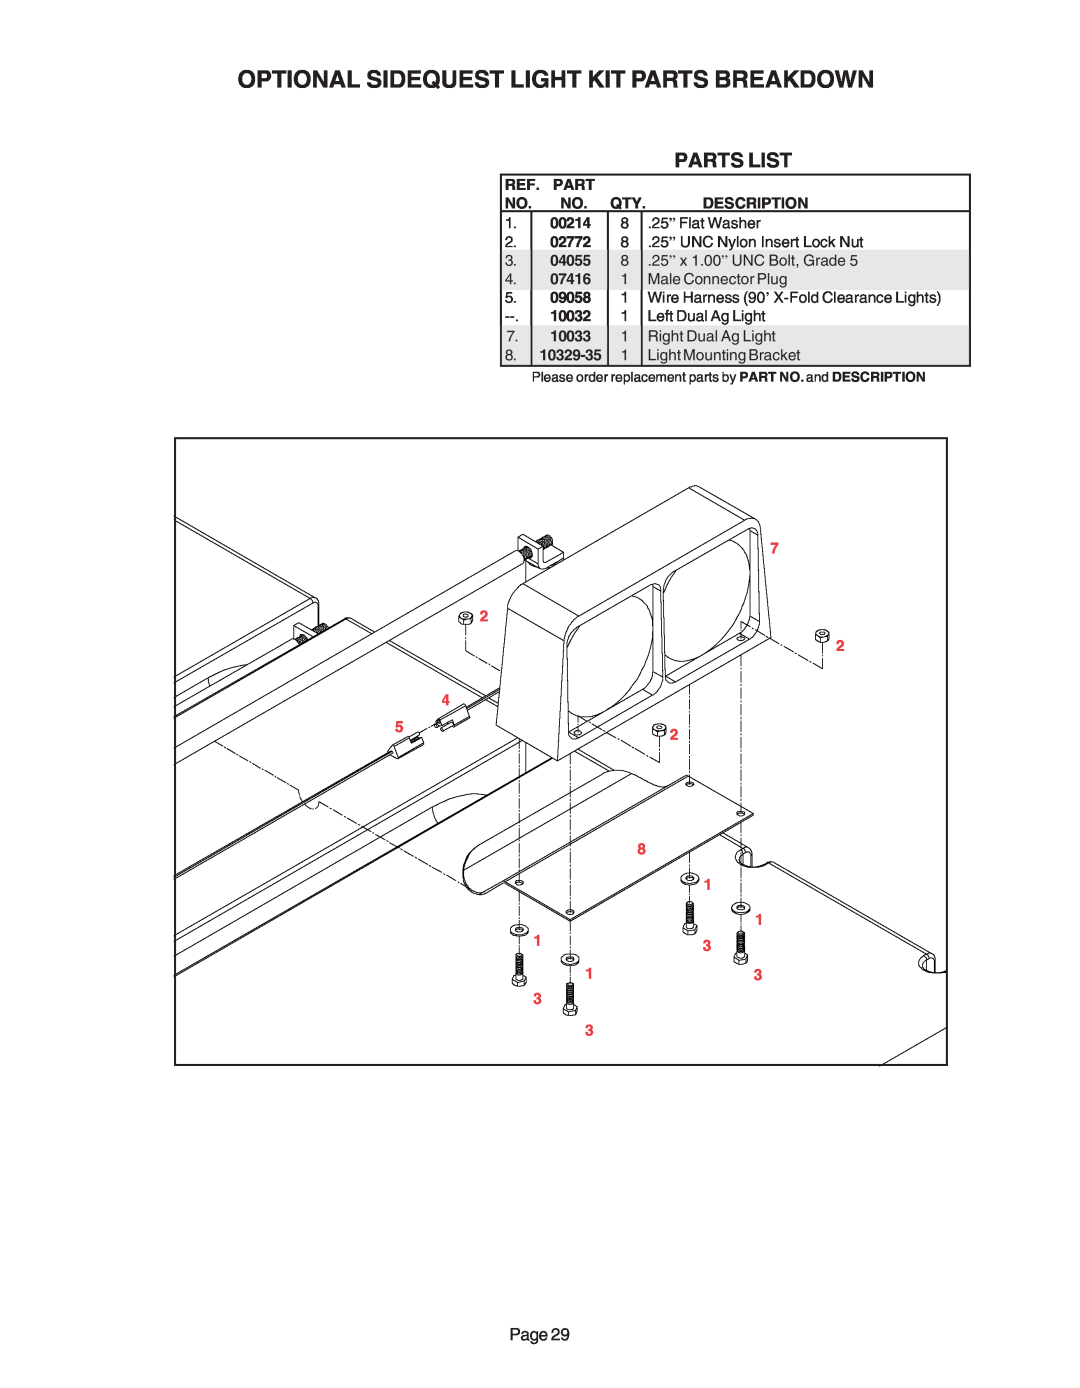 Demco AC20037 Optional Sidequest Light Kit Parts Breakdown, 00214, 02772, 04055, 07416, 09058, 10032, 10033, 10329-35 